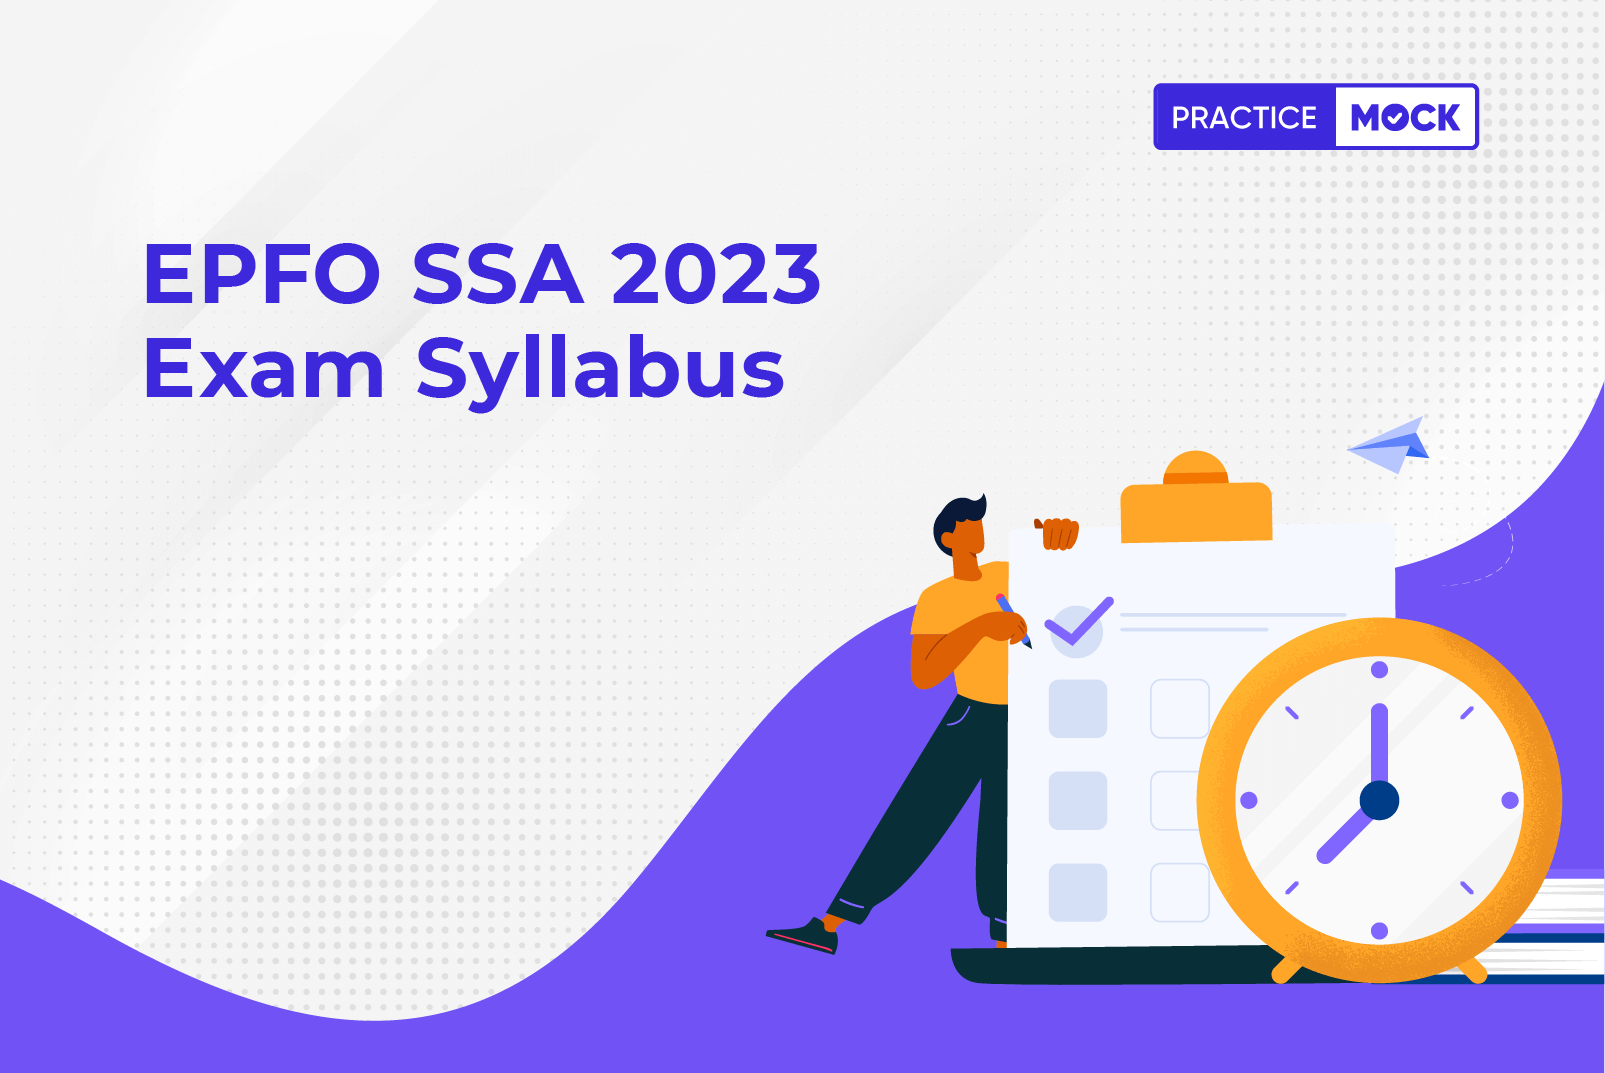 EPFO SSA 2023 Exam Syllabus